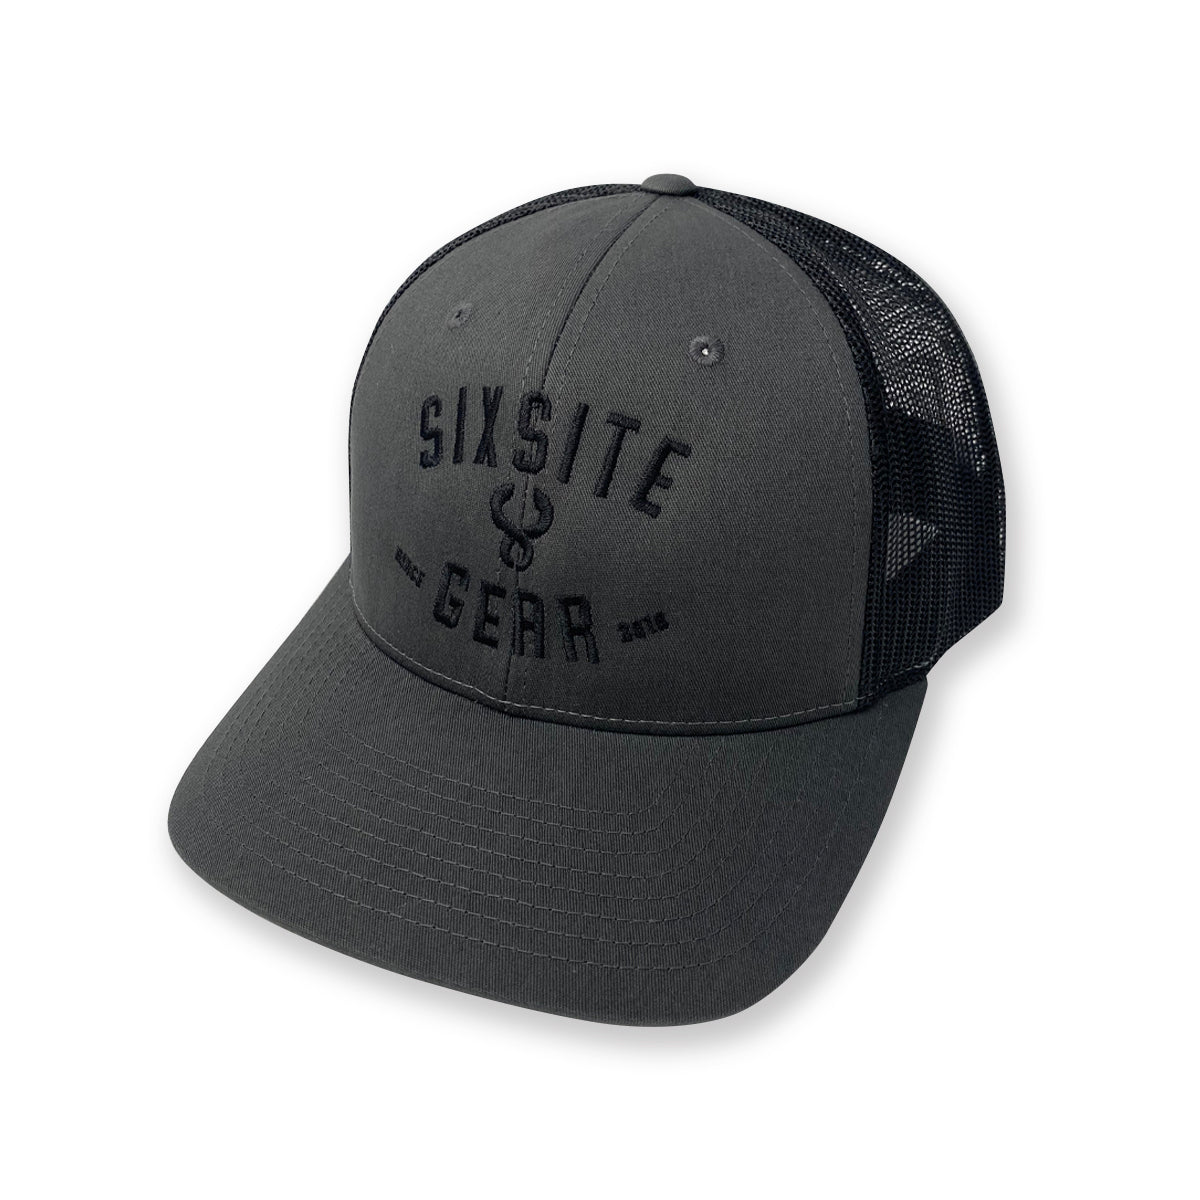 Classic SIXSITE Ball Cap